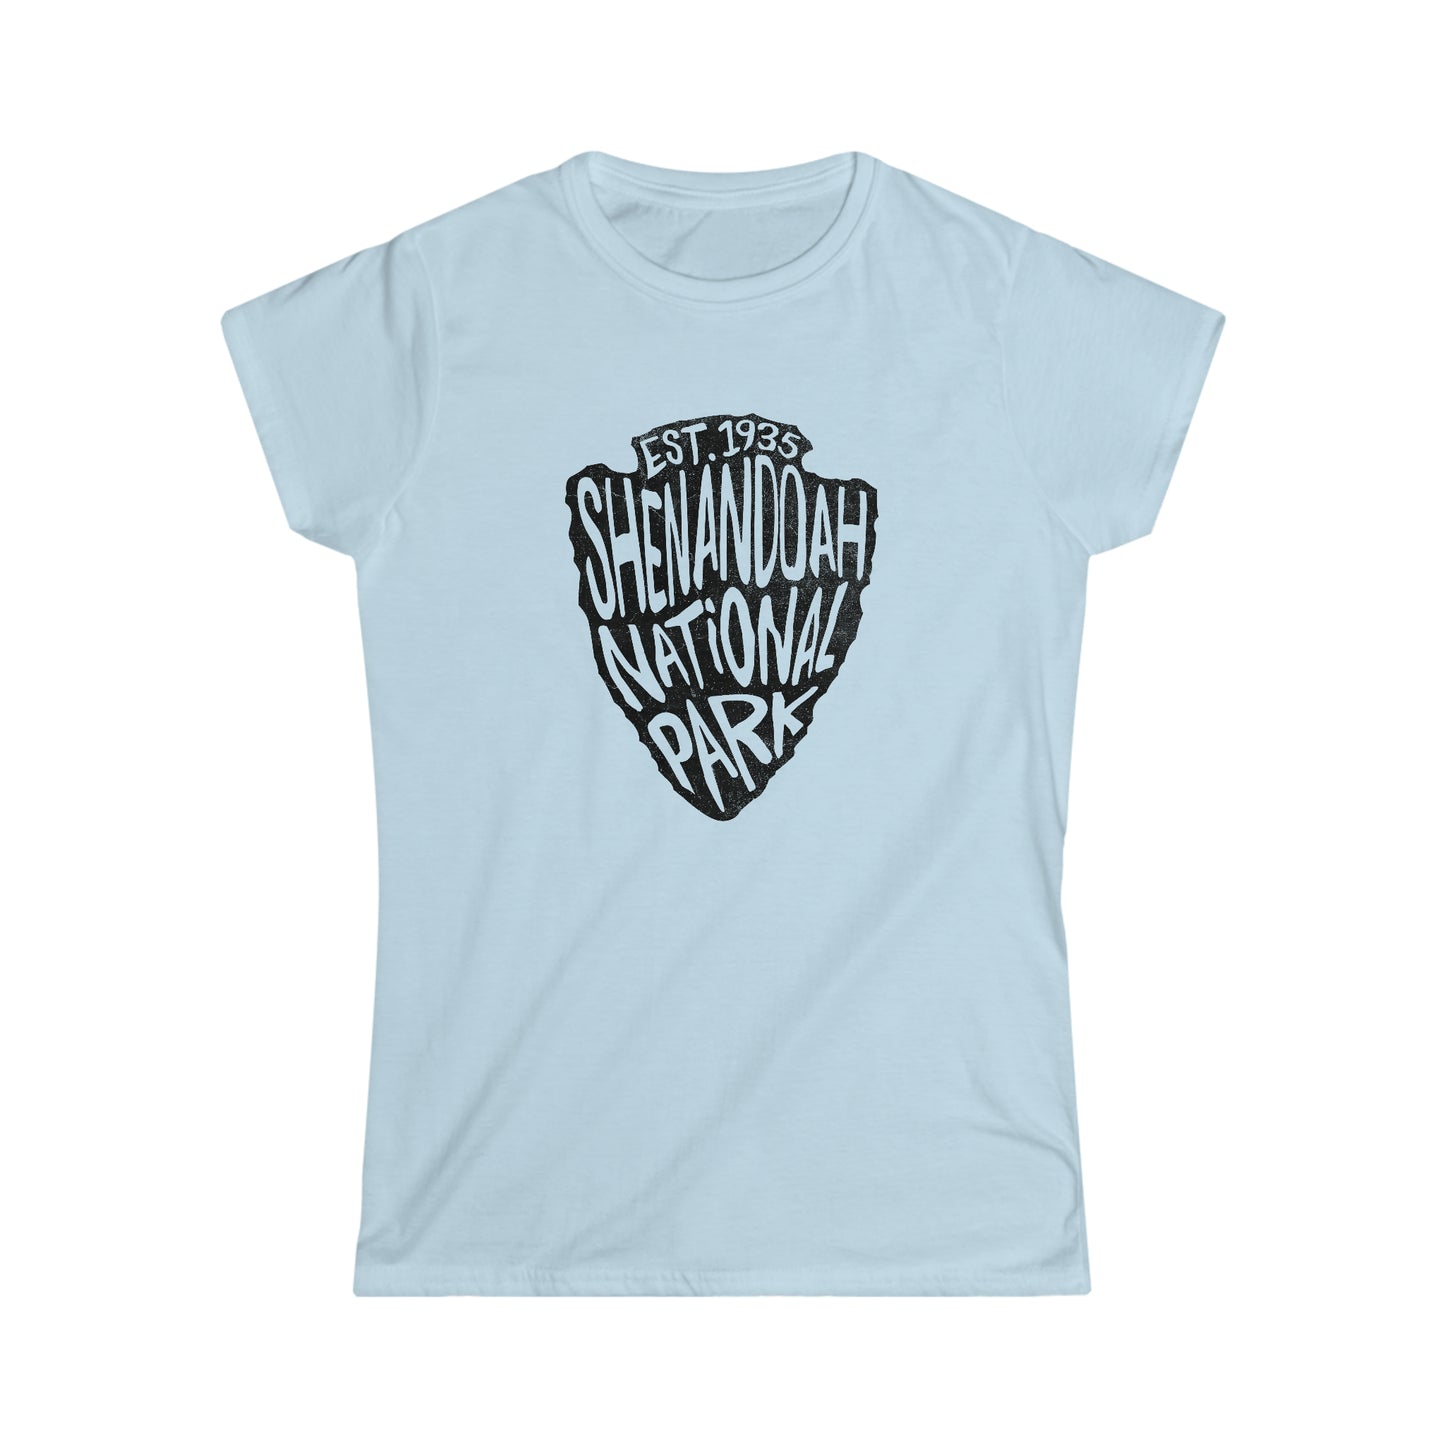 Shenandoah National Park Women's T-Shirt - Arrowhead Design